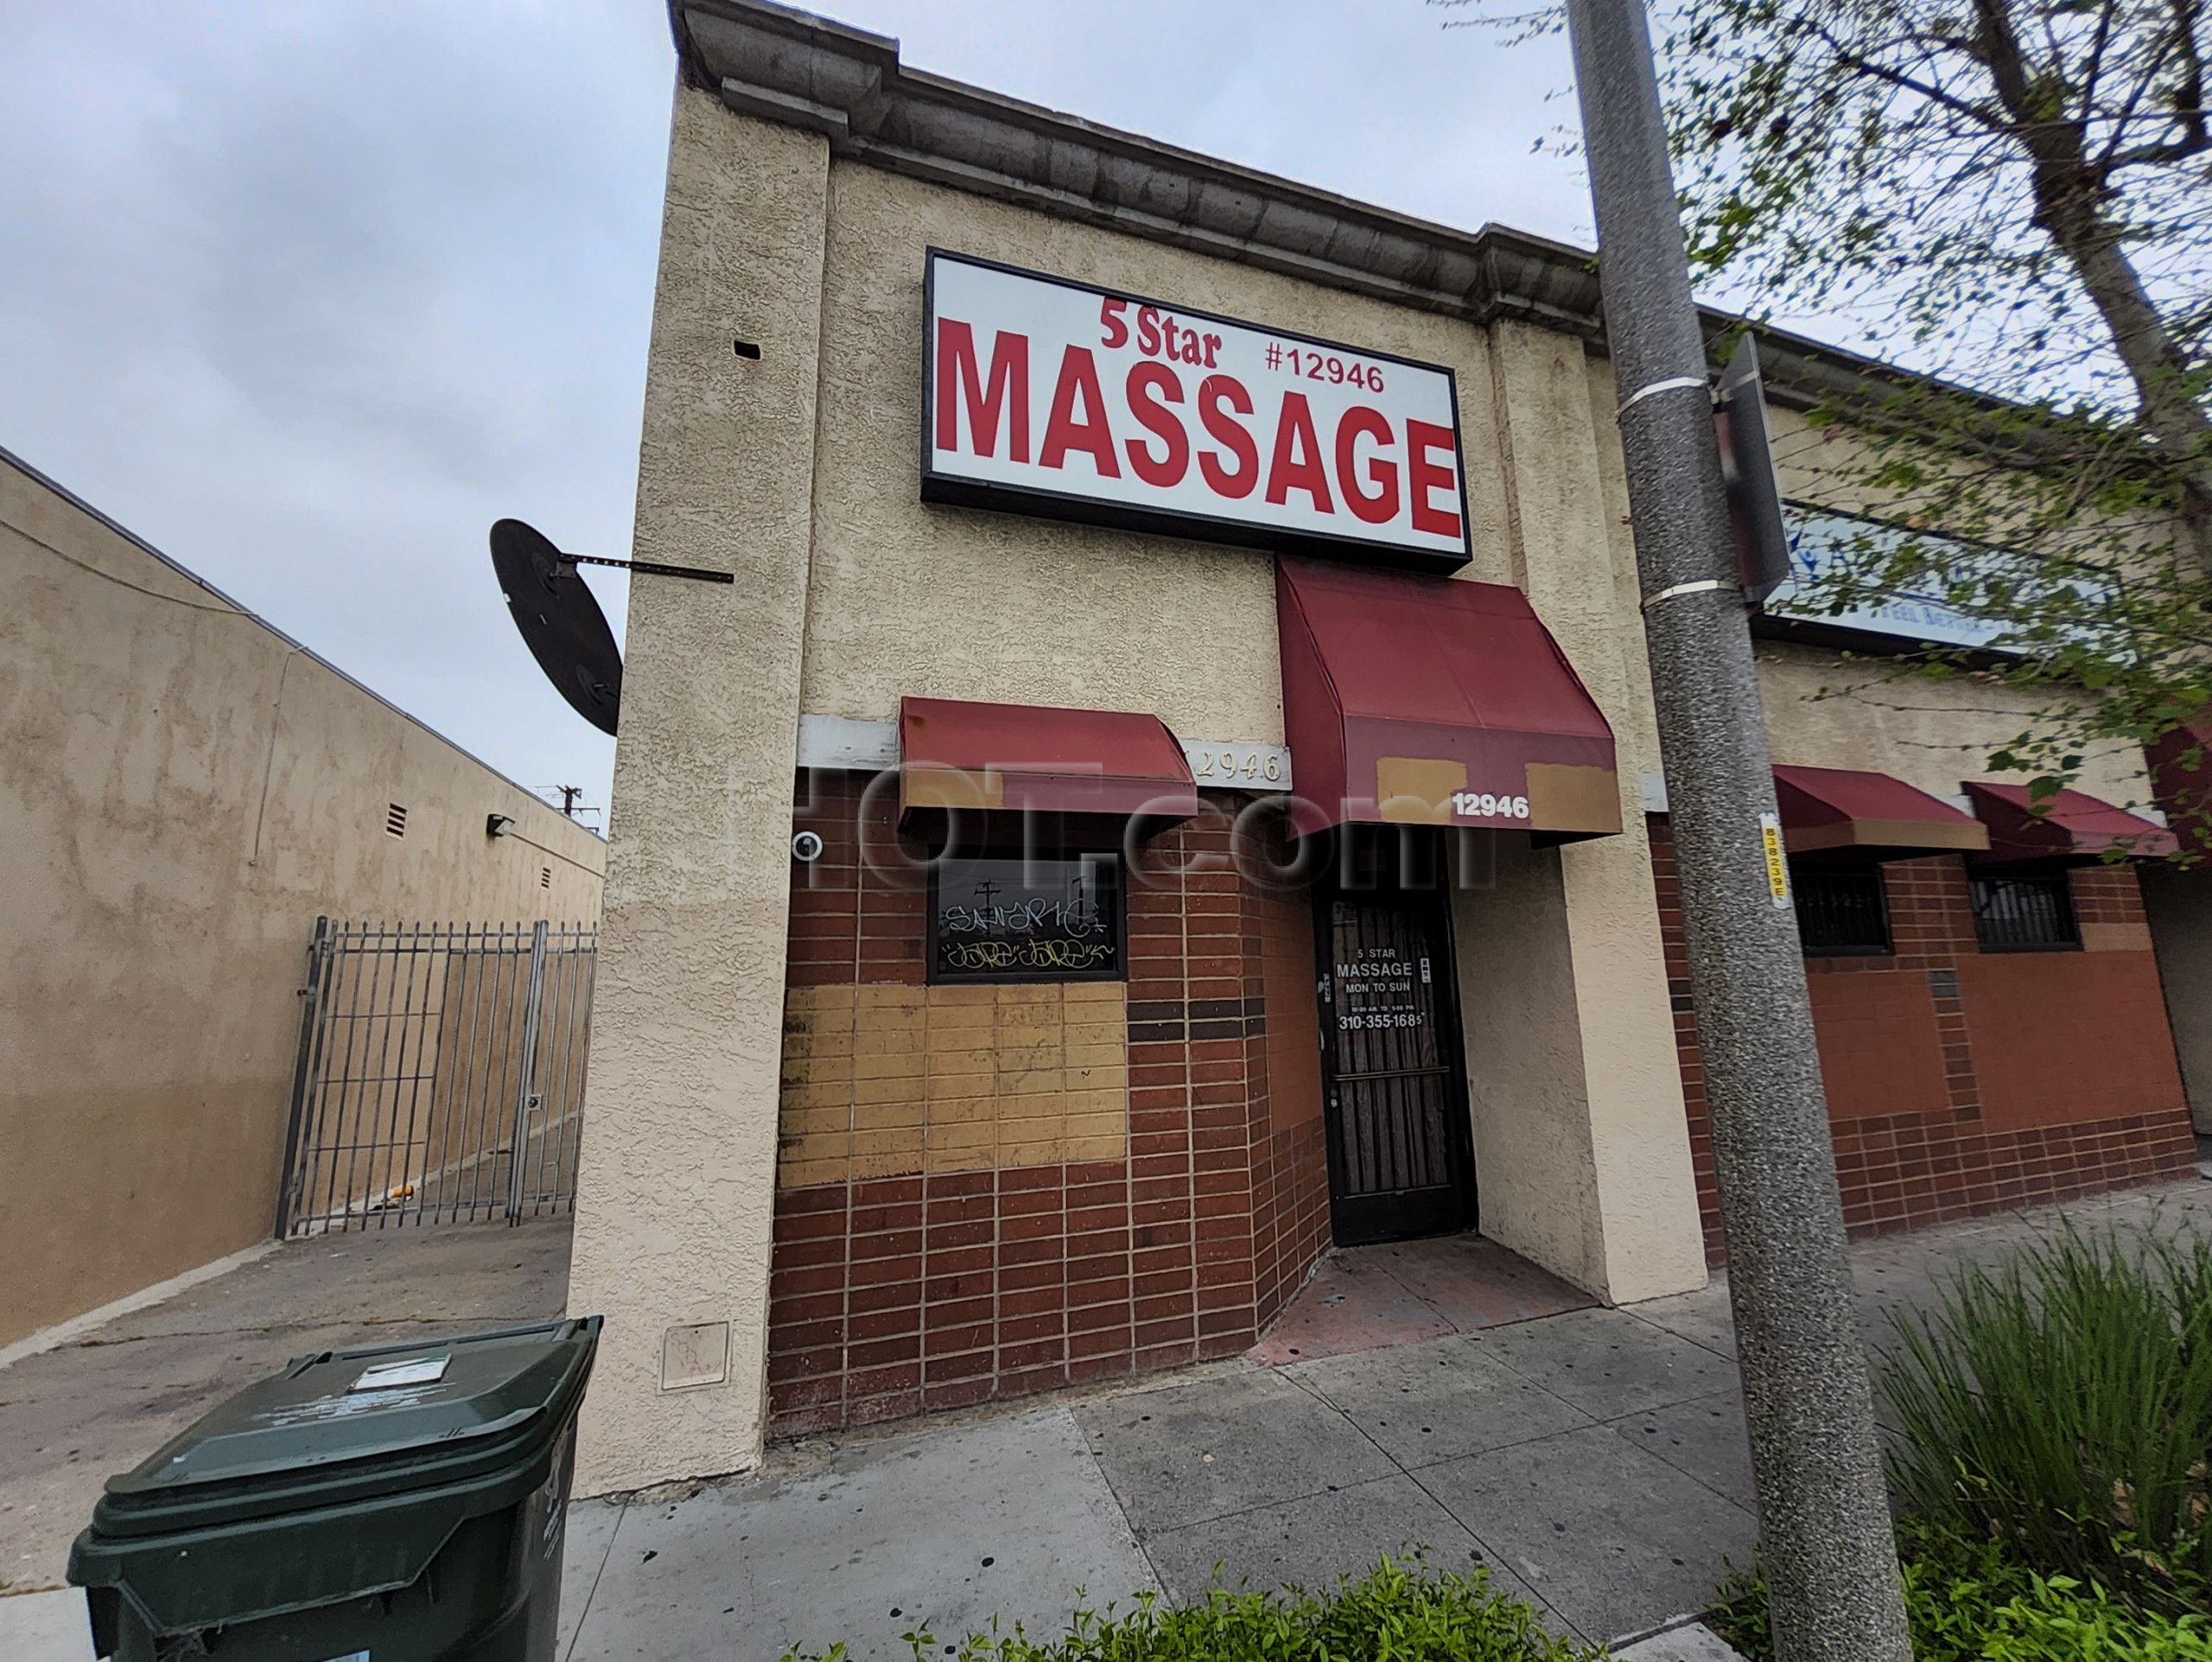 Hawthorne, California 5 Star Massage